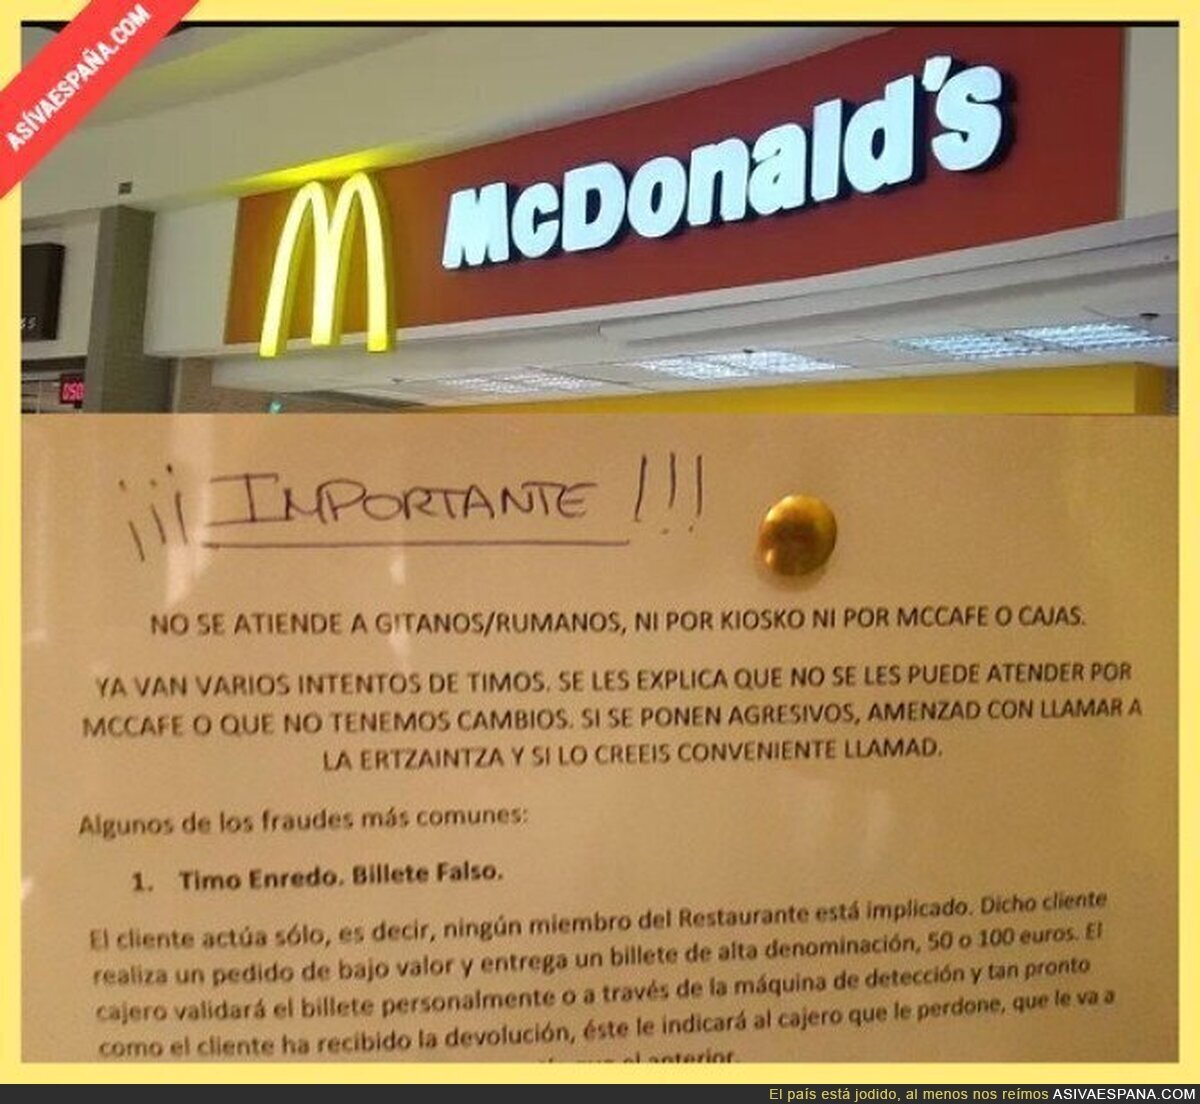 McDonald's en el País Vasco incita a trabajadores a discriminar de forma racista